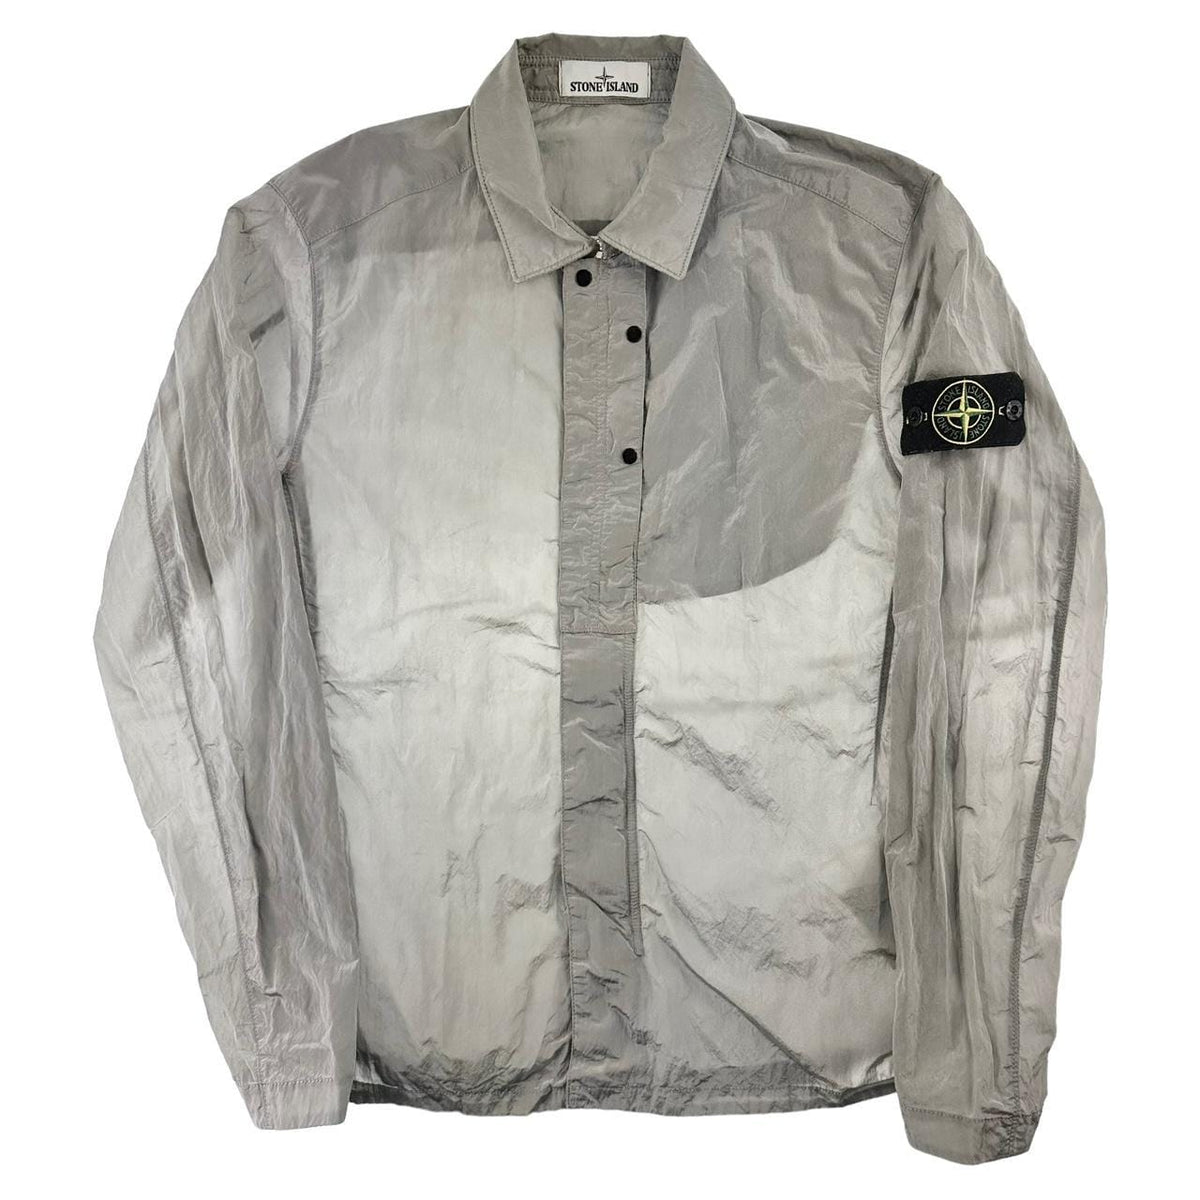 Stone Island metal shell jacket size M